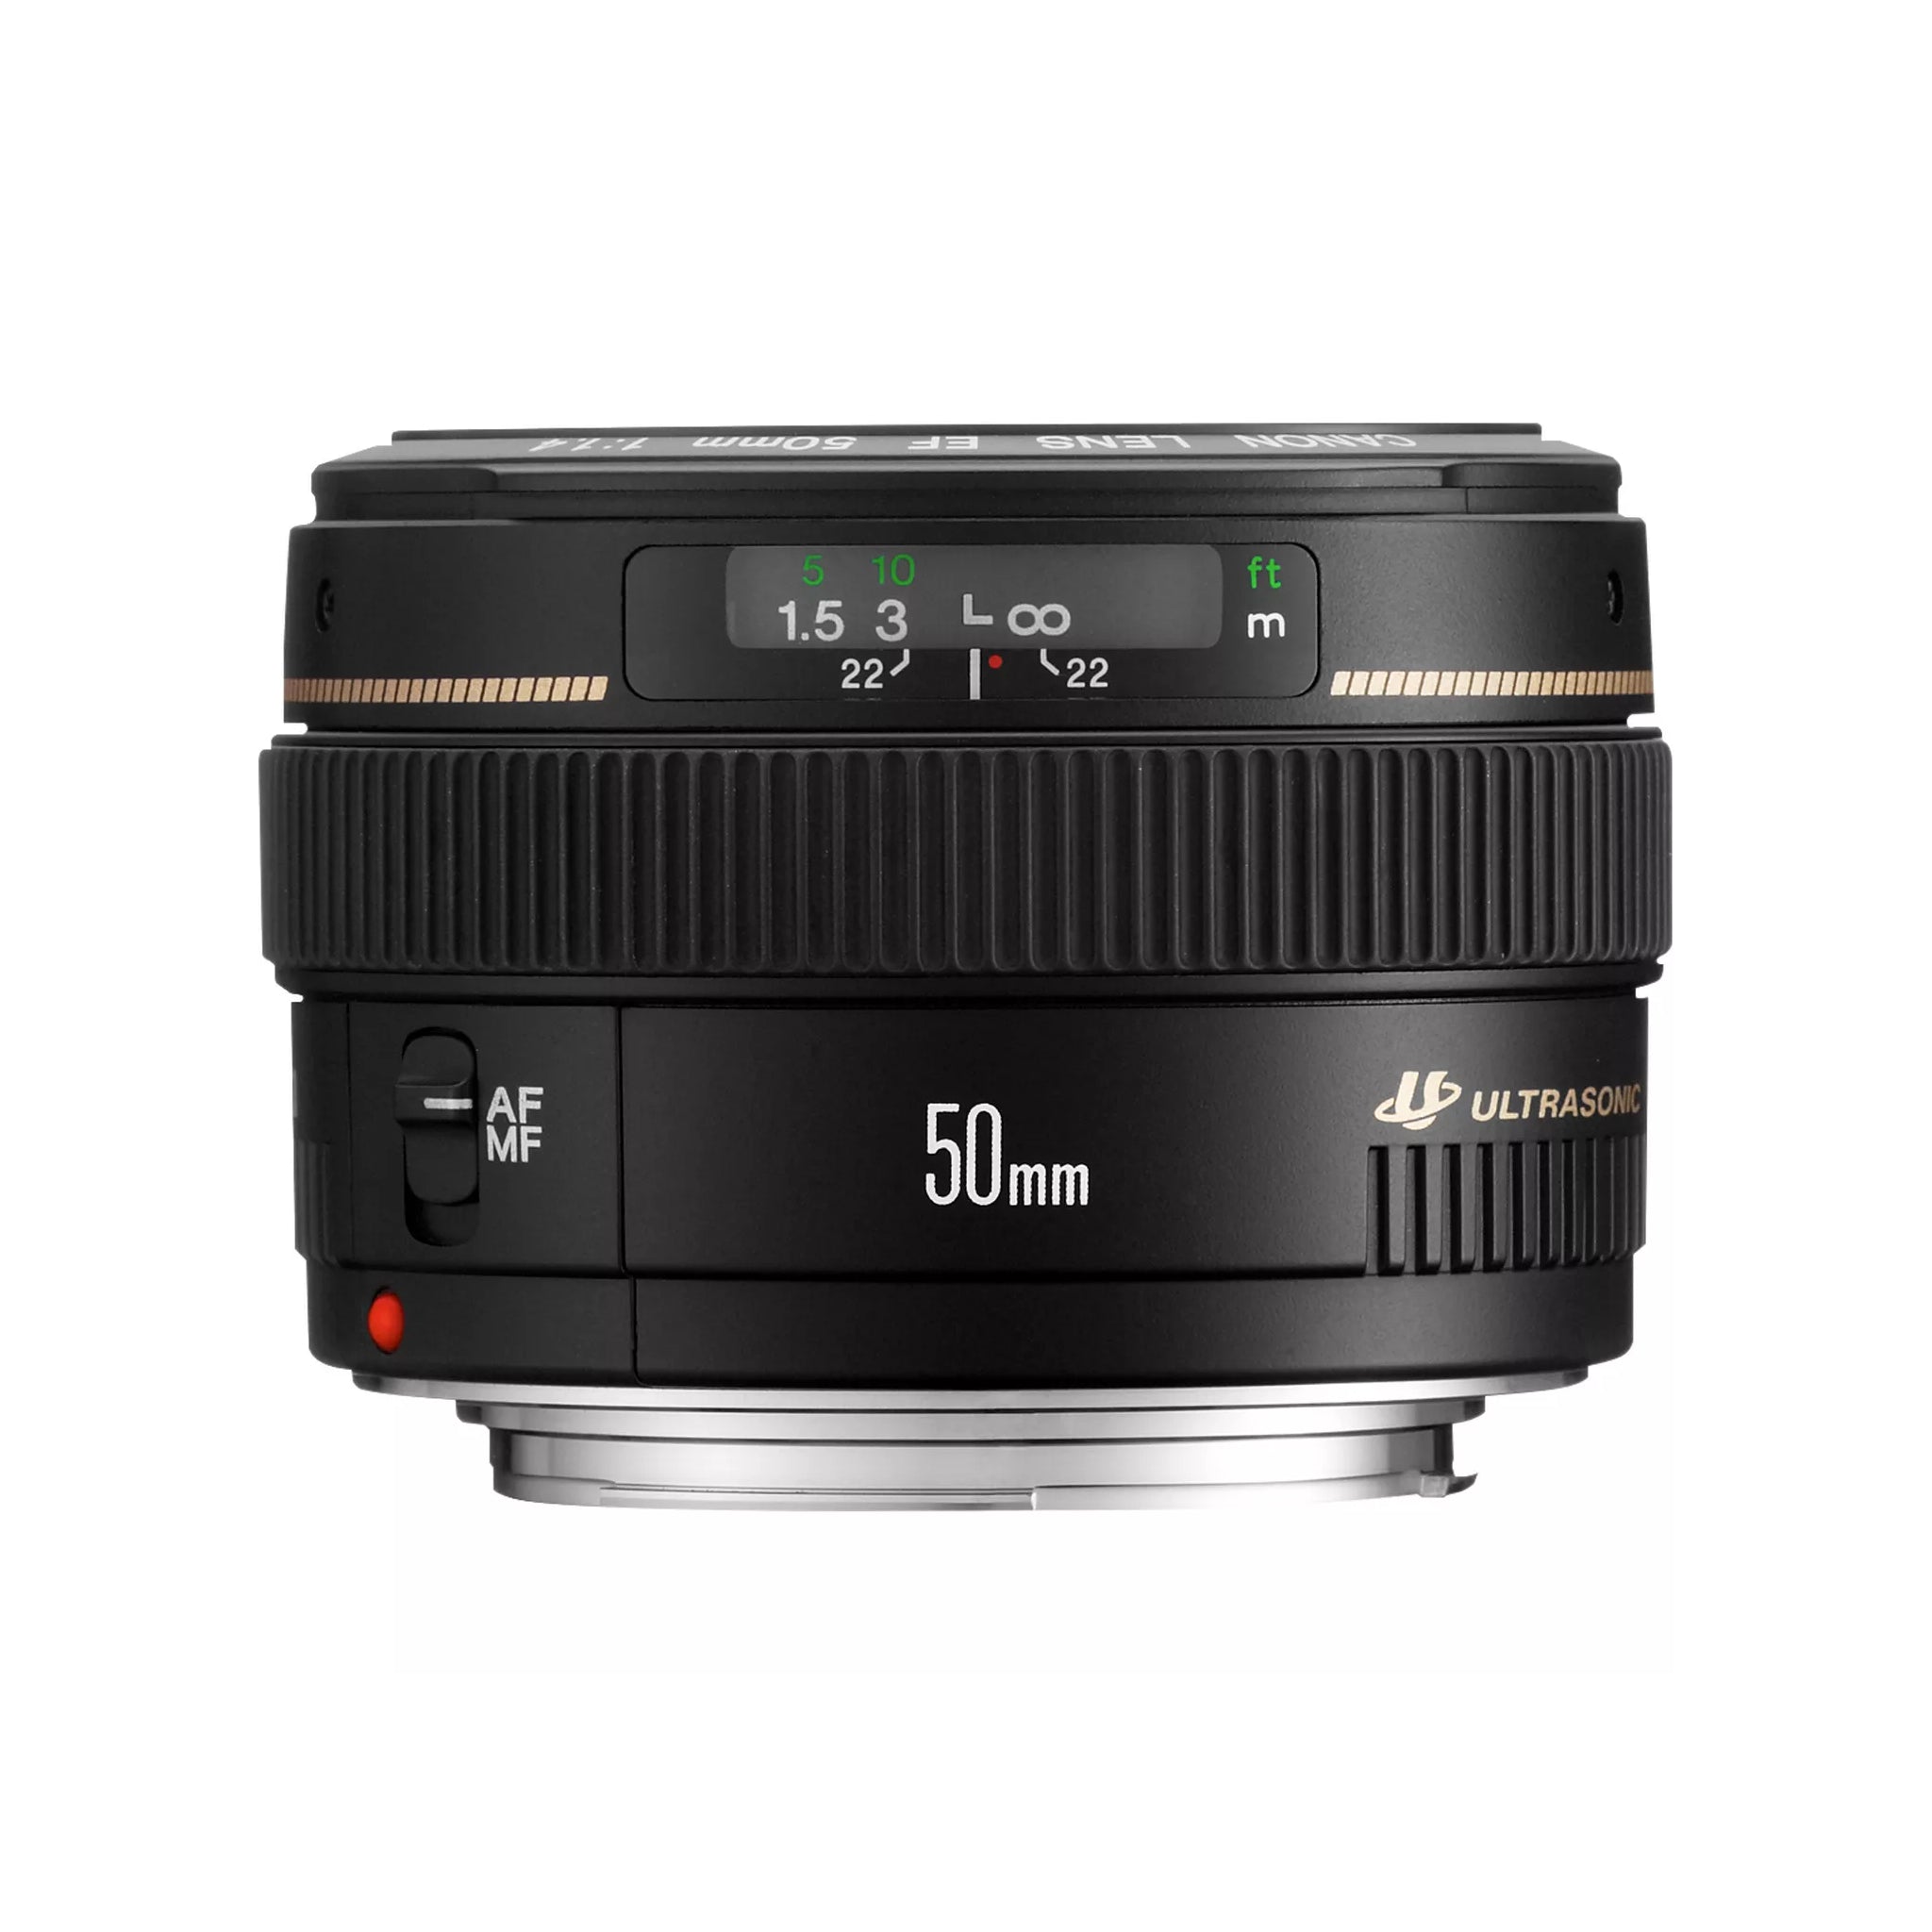 Canon EF 50mm f1.4 IS USM lens